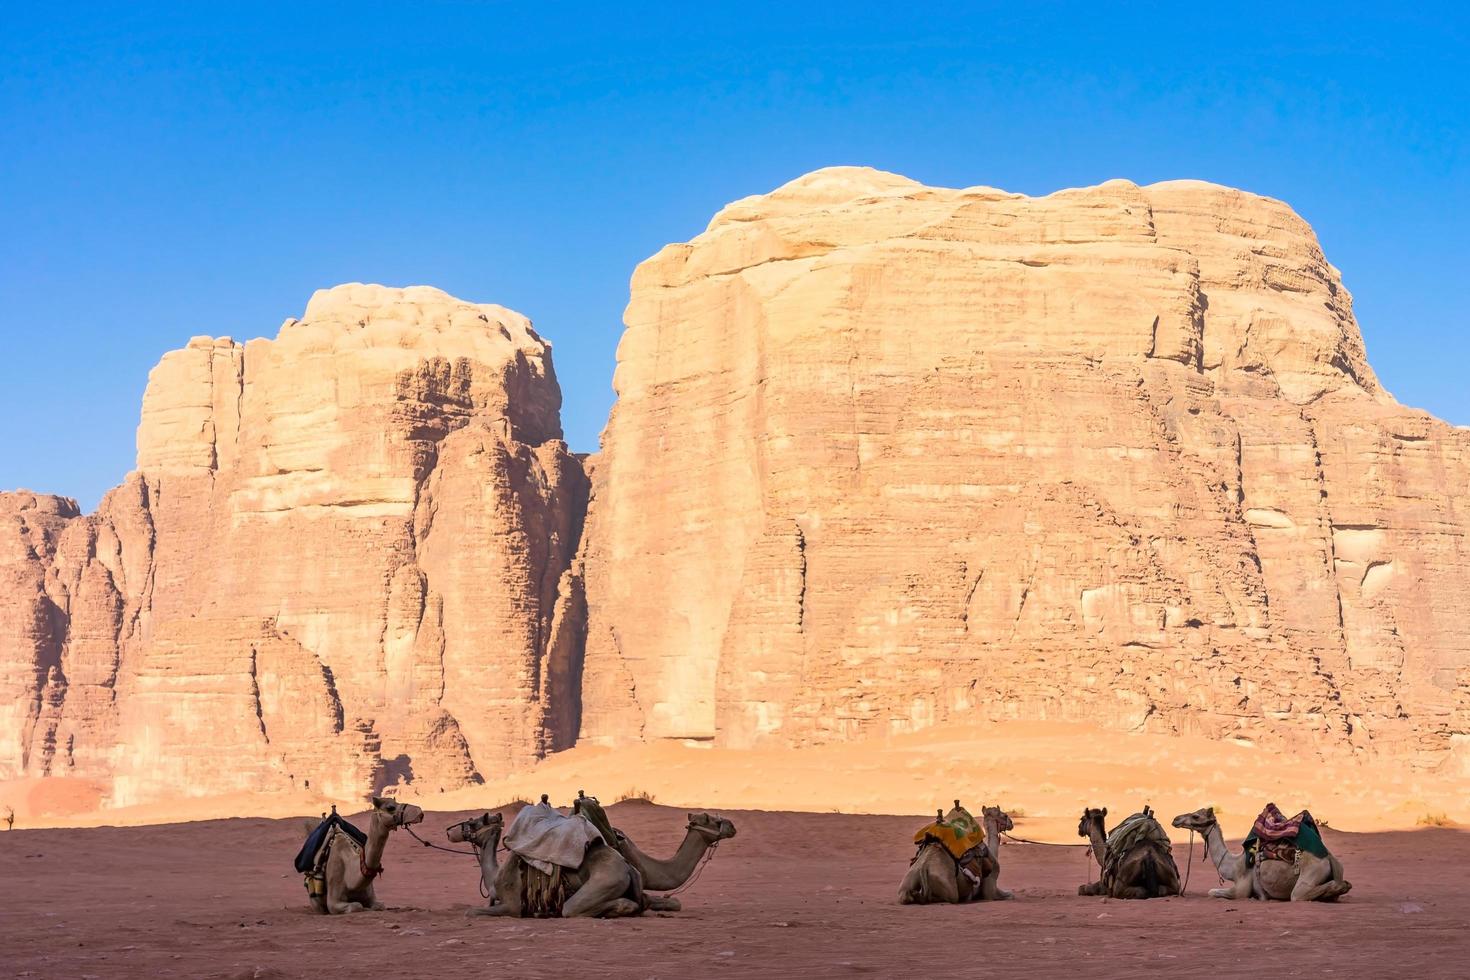 Desert landscape with camels in the Wadi Rum, Jordan photo